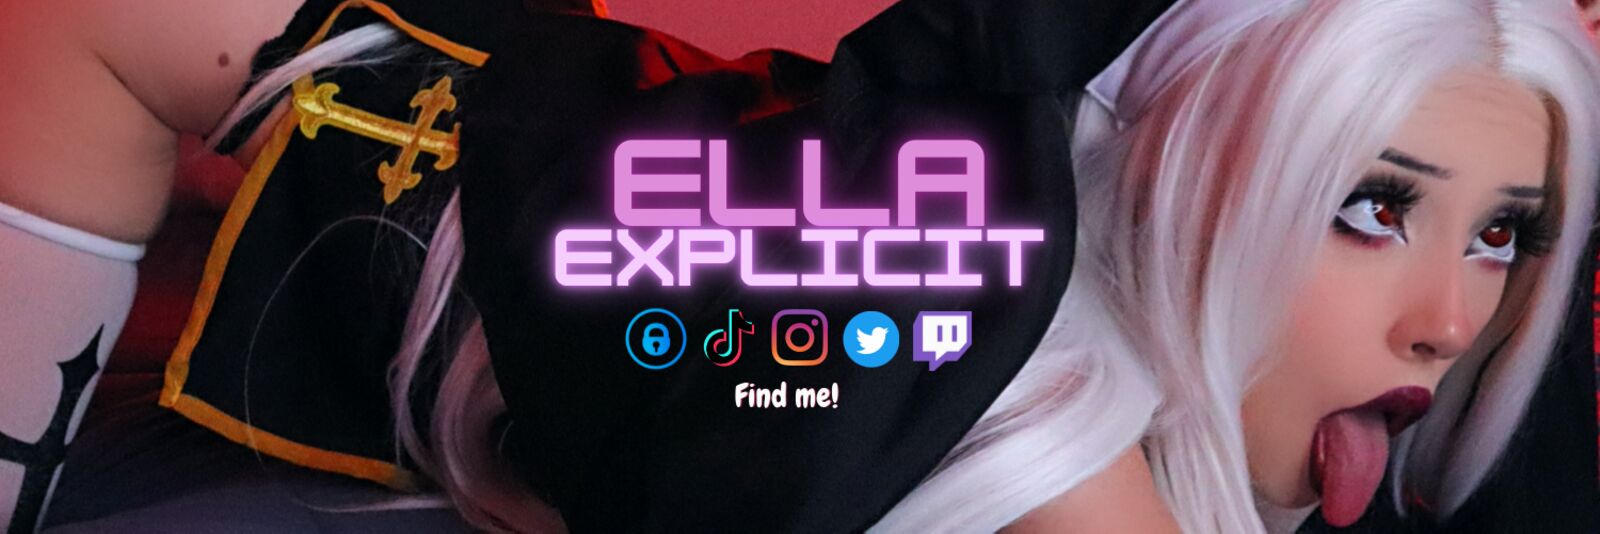 See Ella Explicit 💋 profile